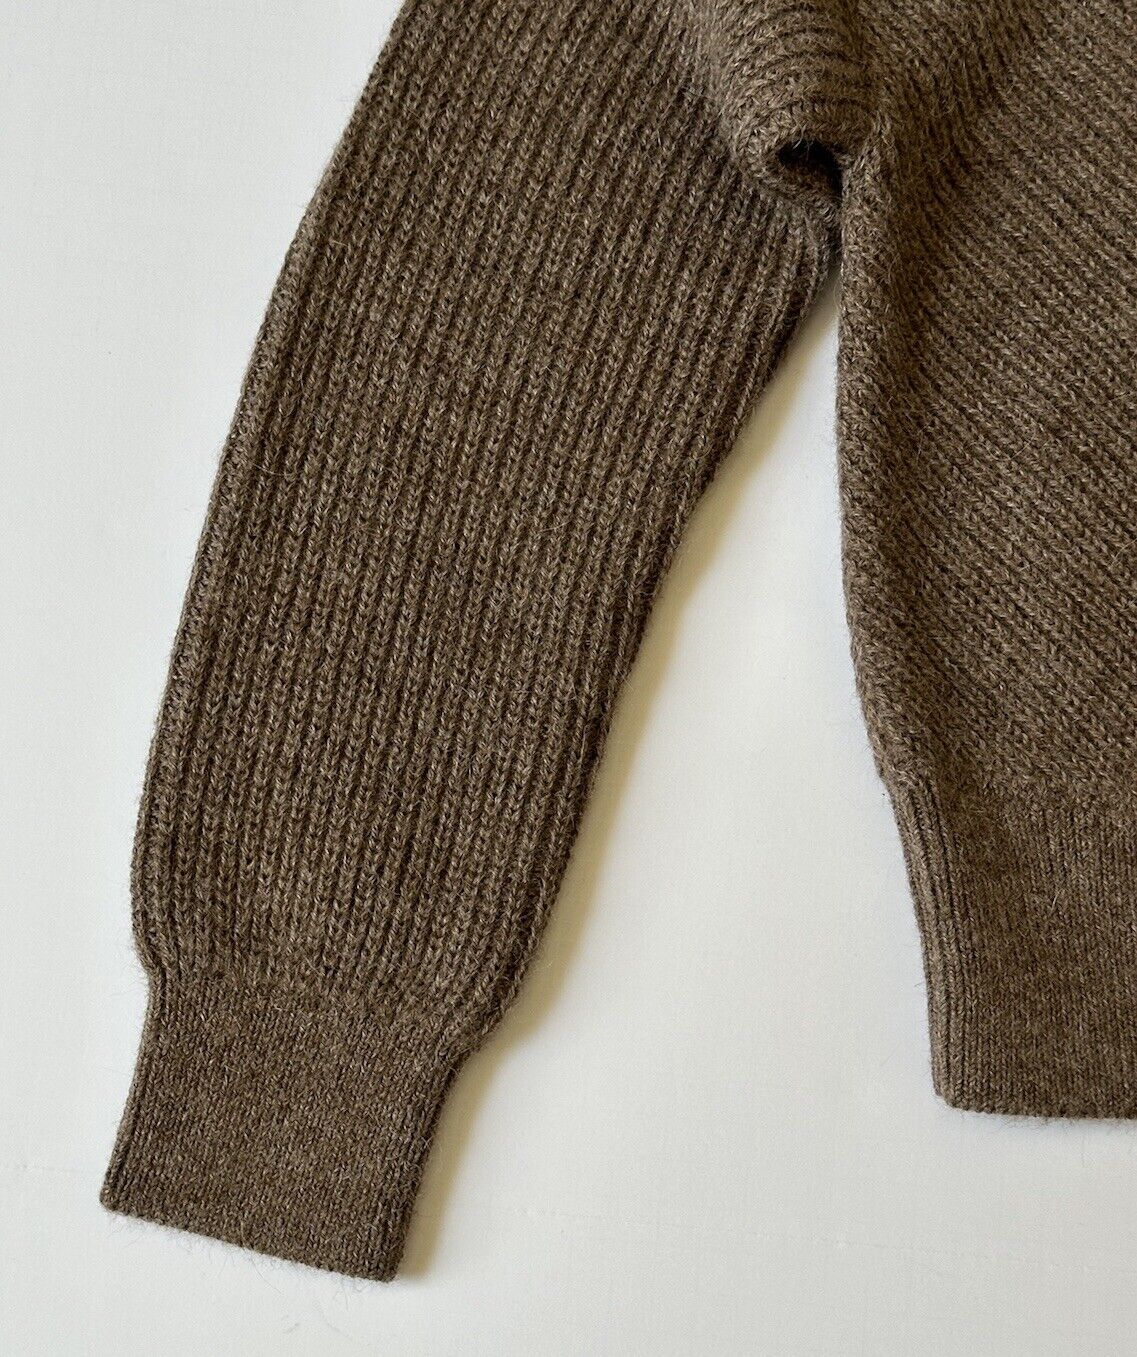 Bottega Veneta Women's Alpaca Chevron Knit Brown Sweater L 719793 IT NWT $1900